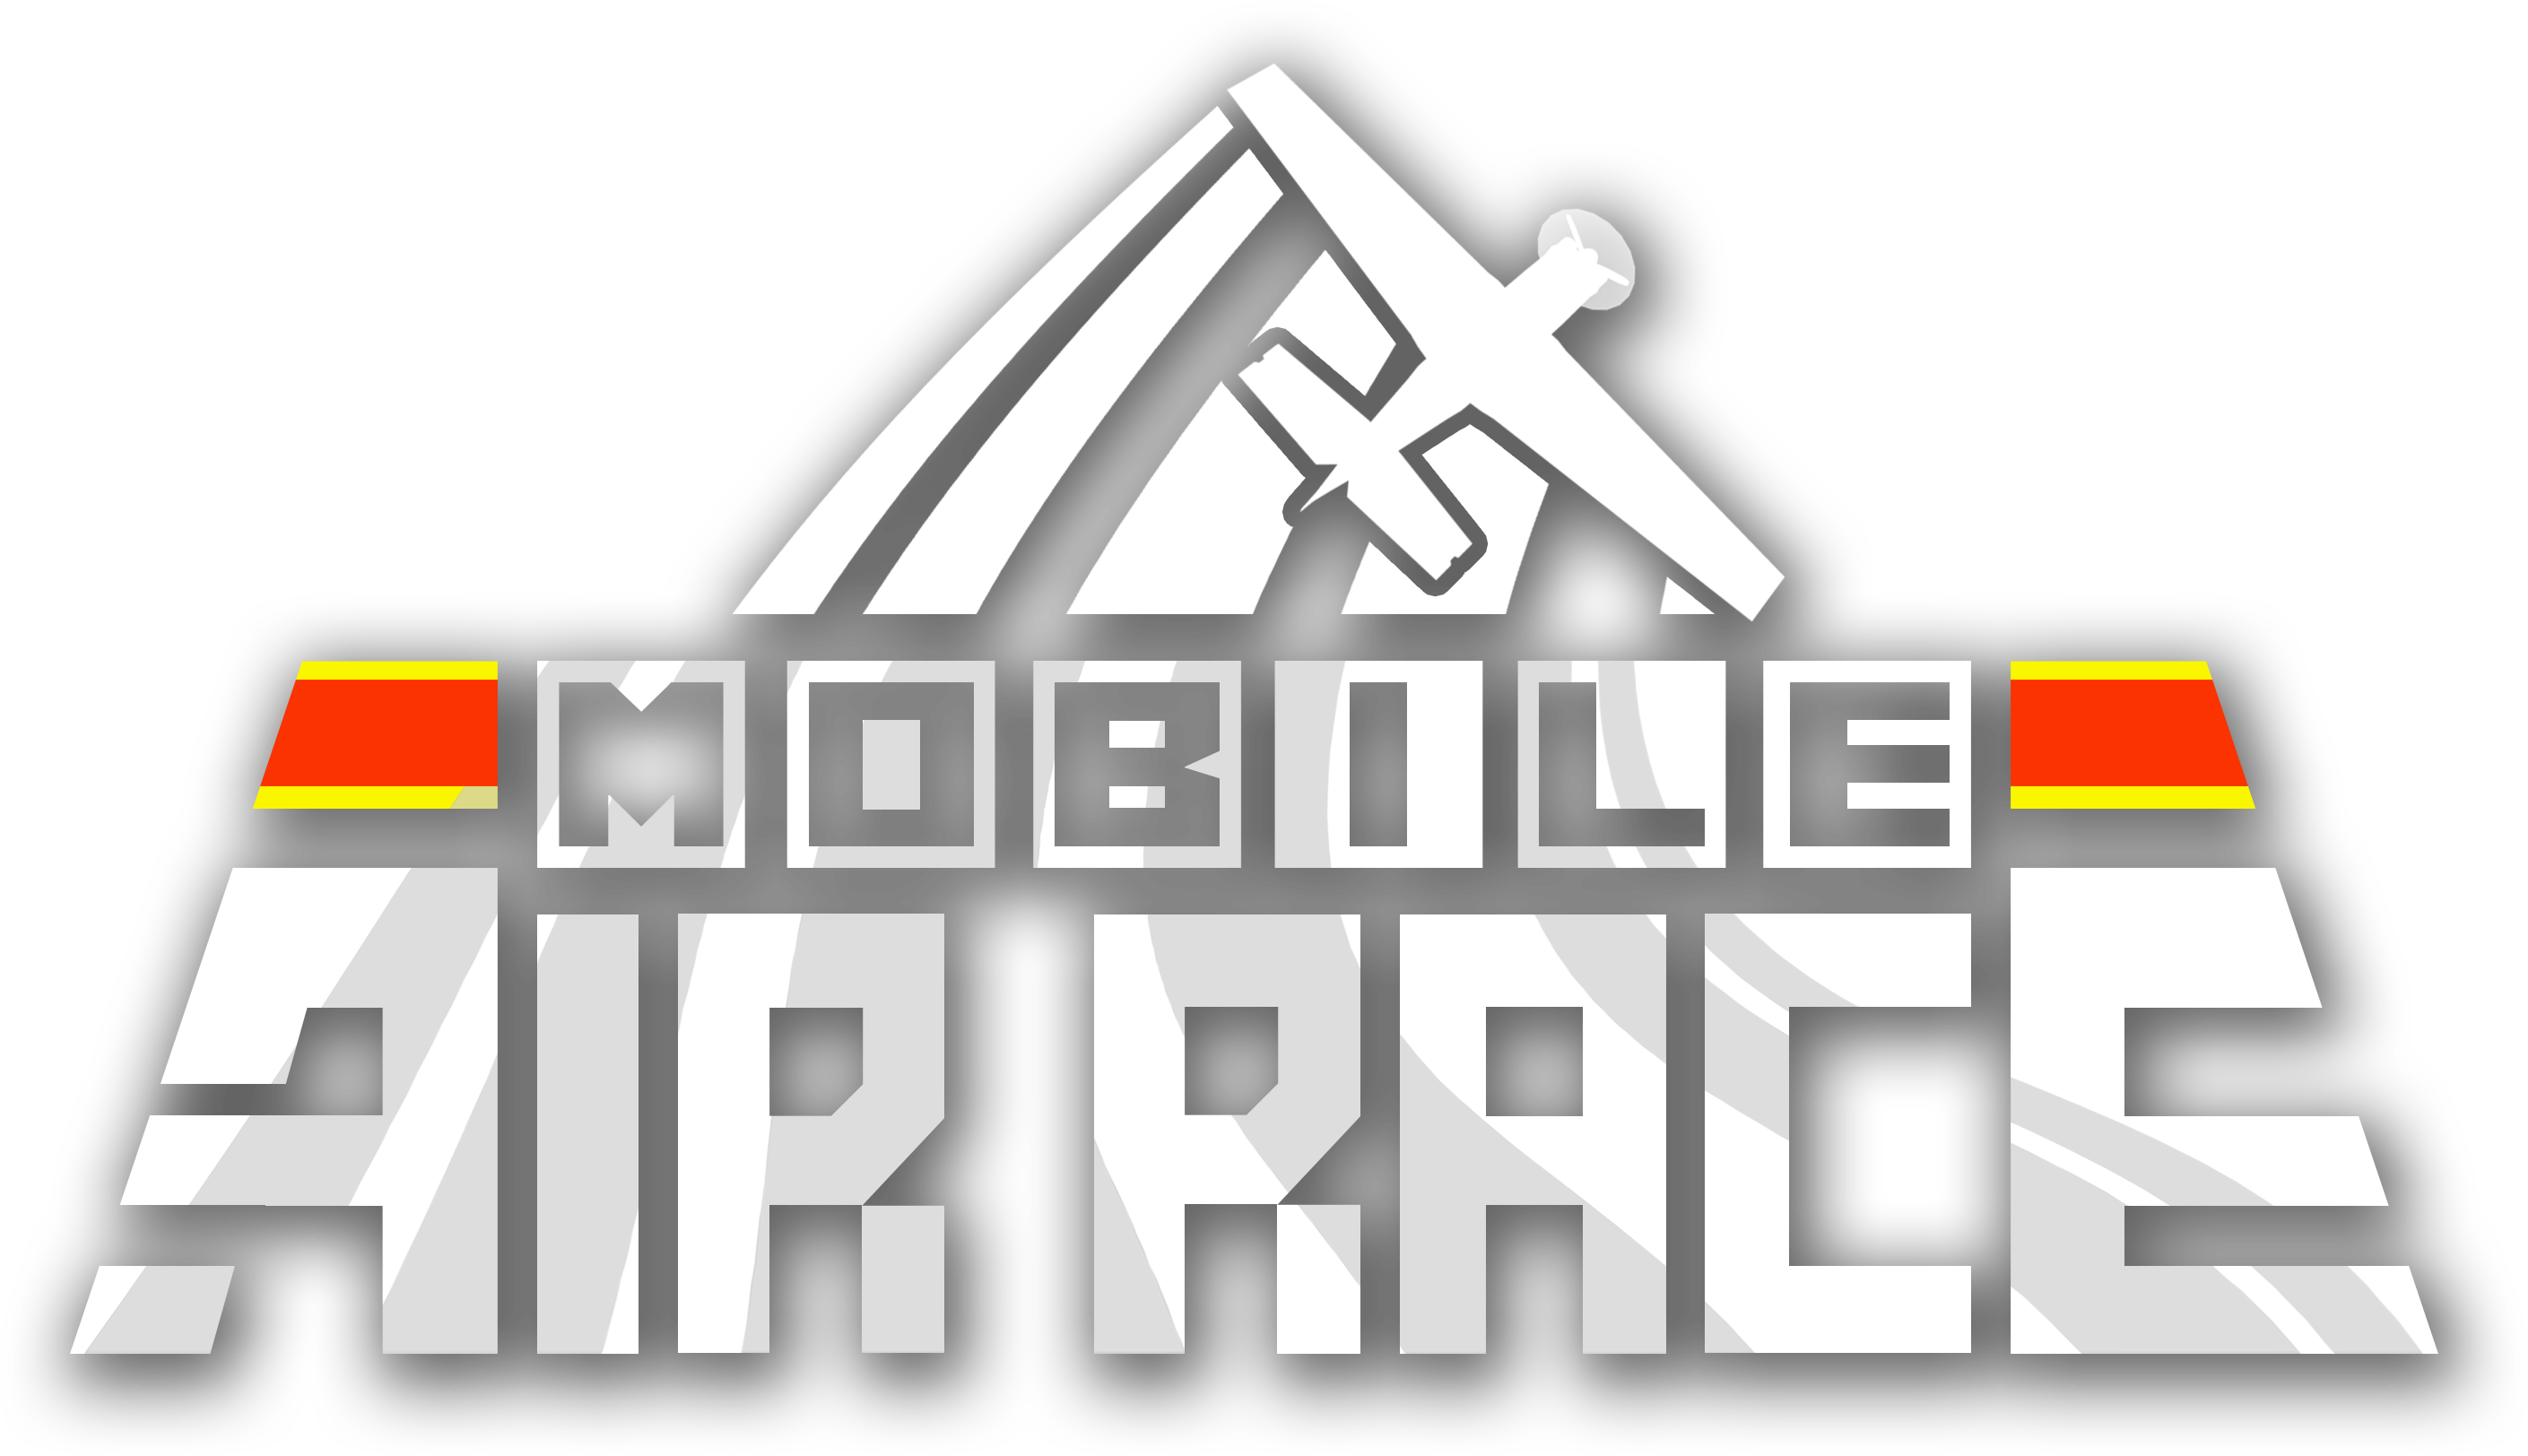 Mobile Air Race